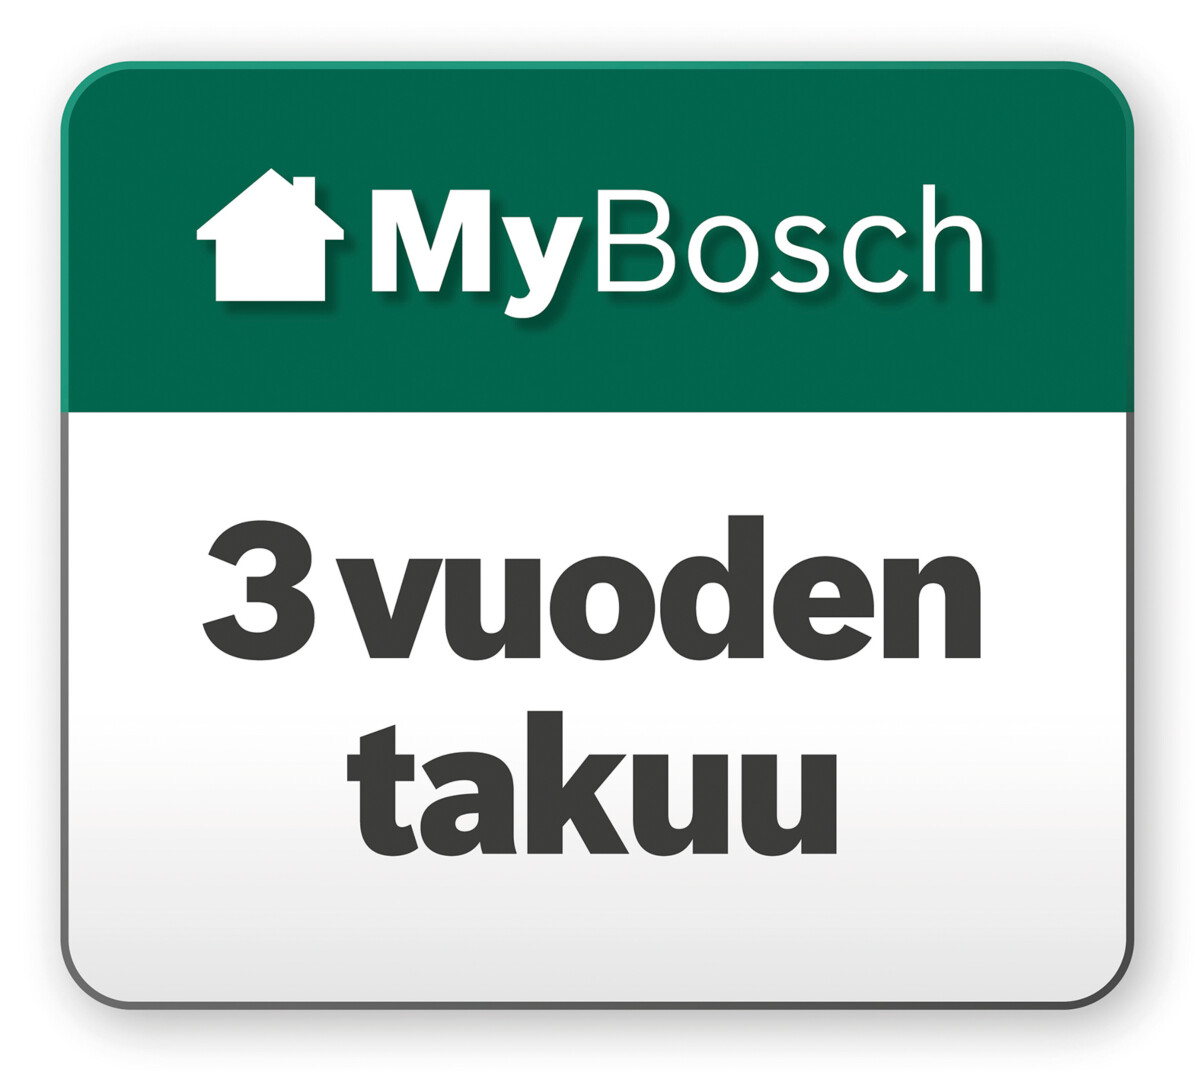 Bosch 3 vuoden takuu